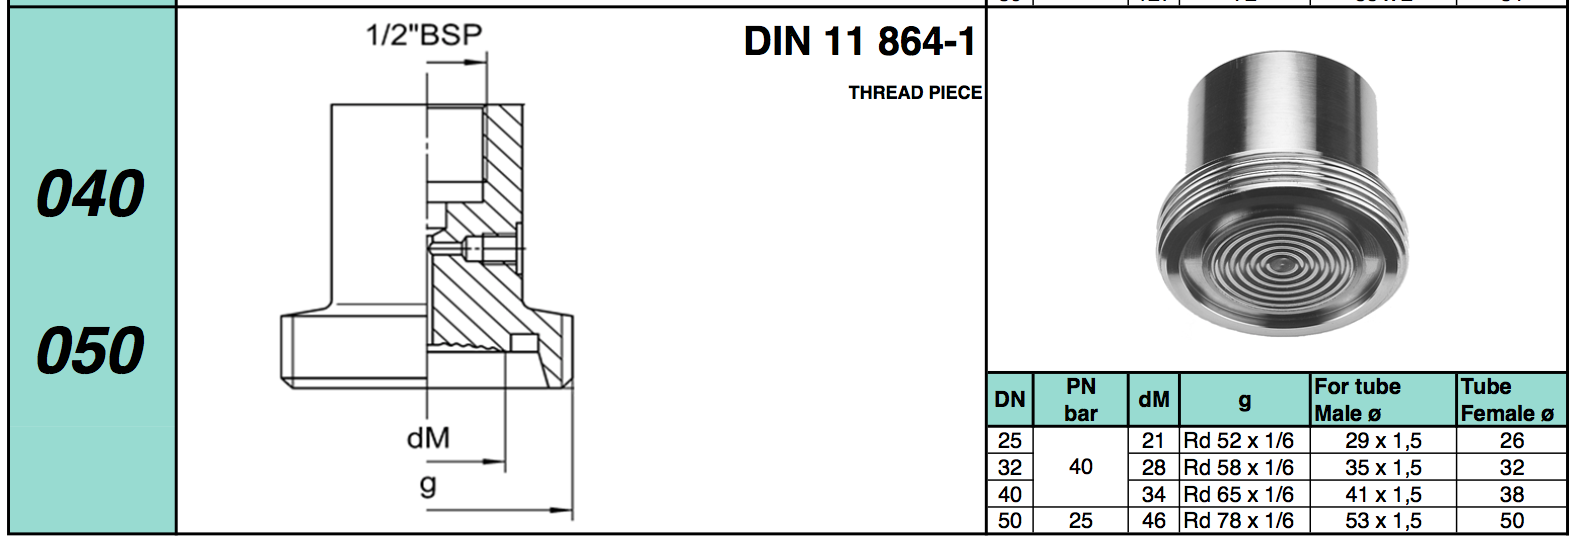 Chuẩn kết nối Diaphragm Seal dạng Thread Piece DIN 11 864-1